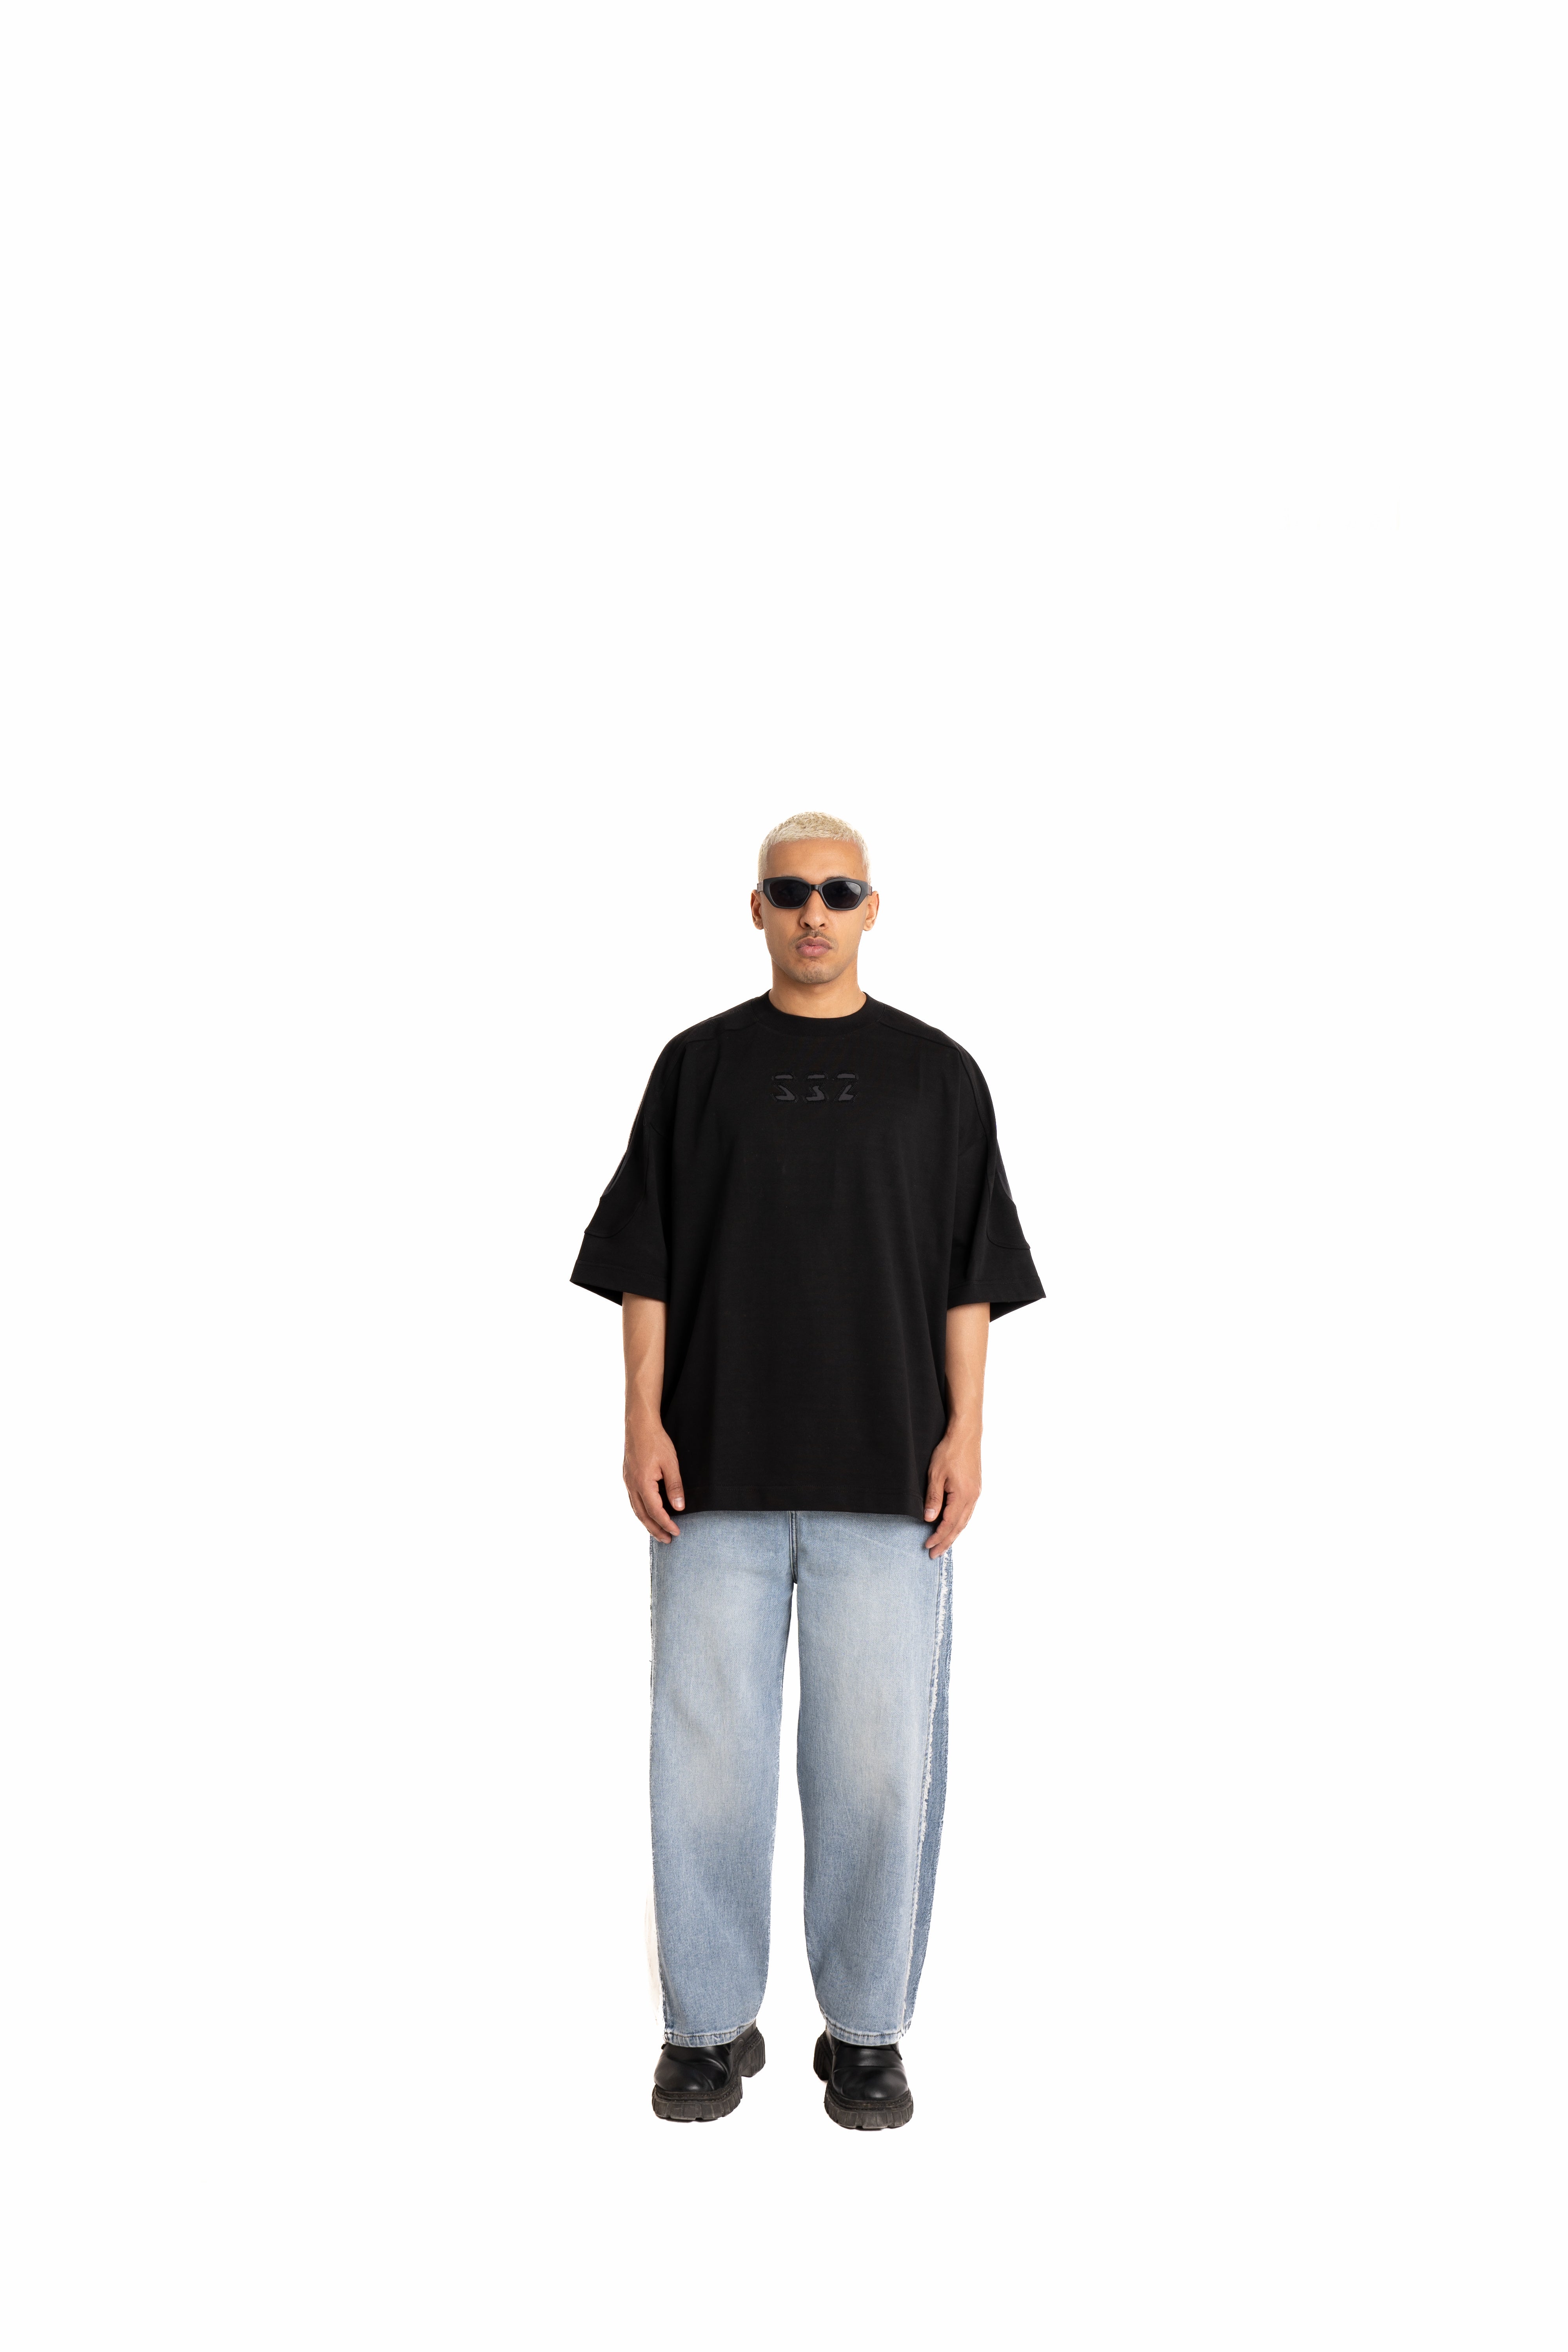 Black Oversize Cotton T-shirt By S32